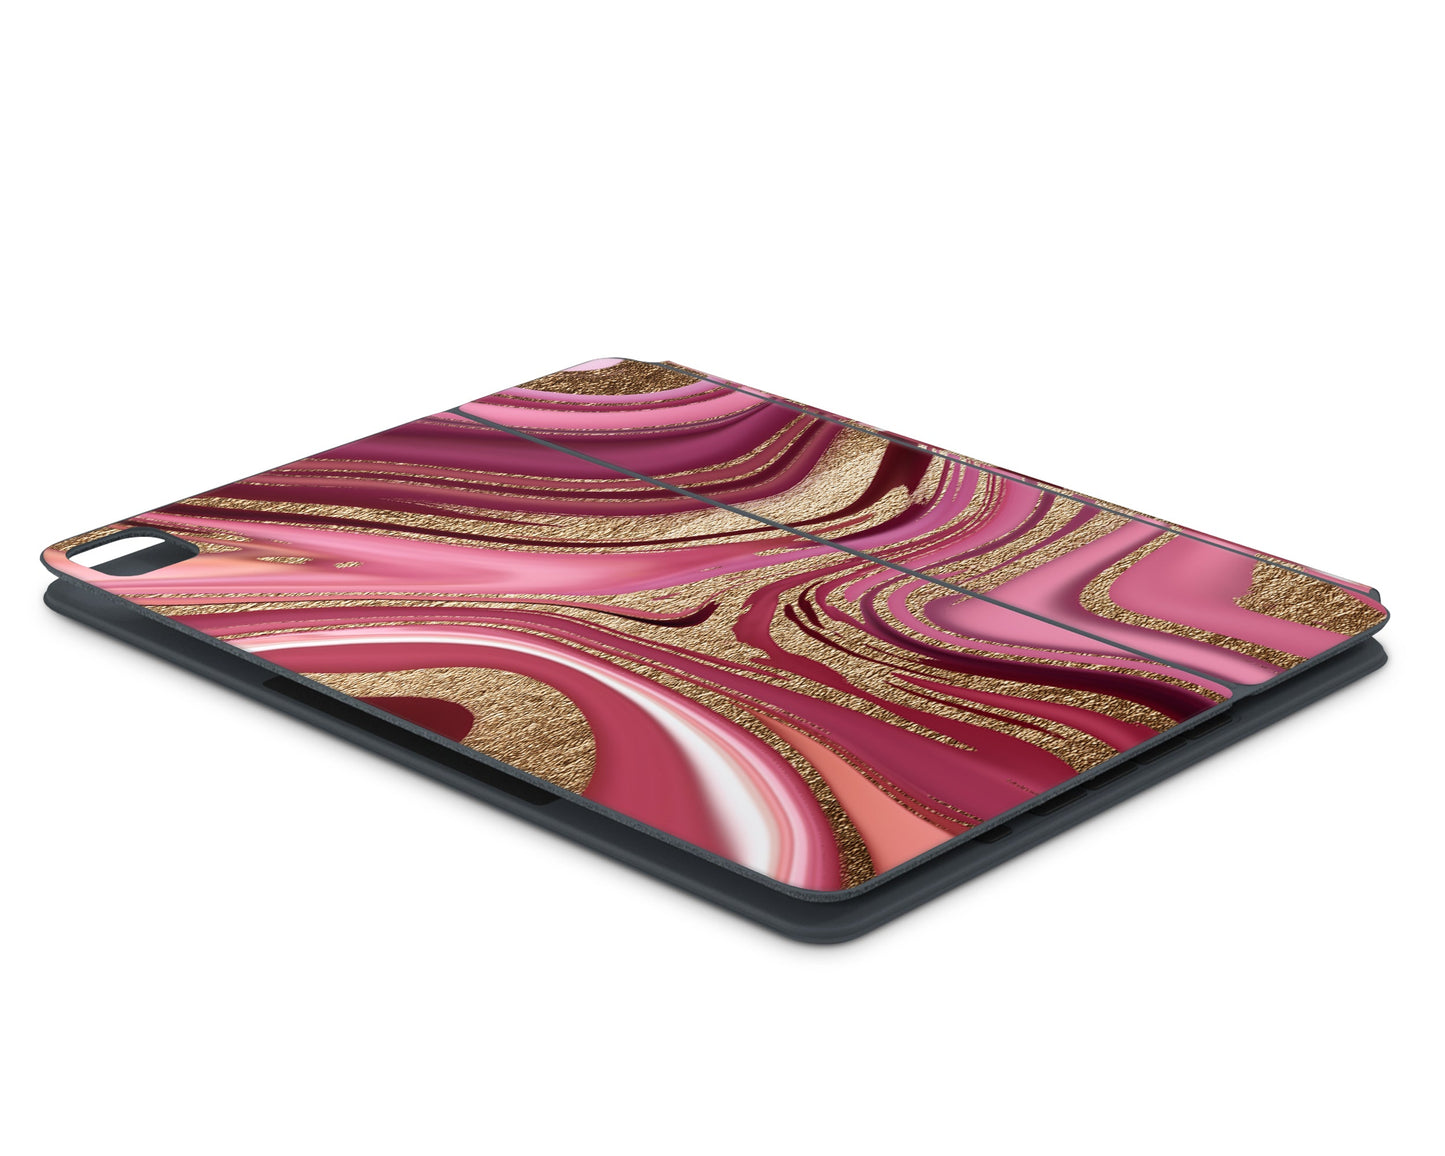 Lux Skins Magic Keyboard Ethereal Pink Gold Marble iPad Pro 11" Skins - Pattern Marble Skin